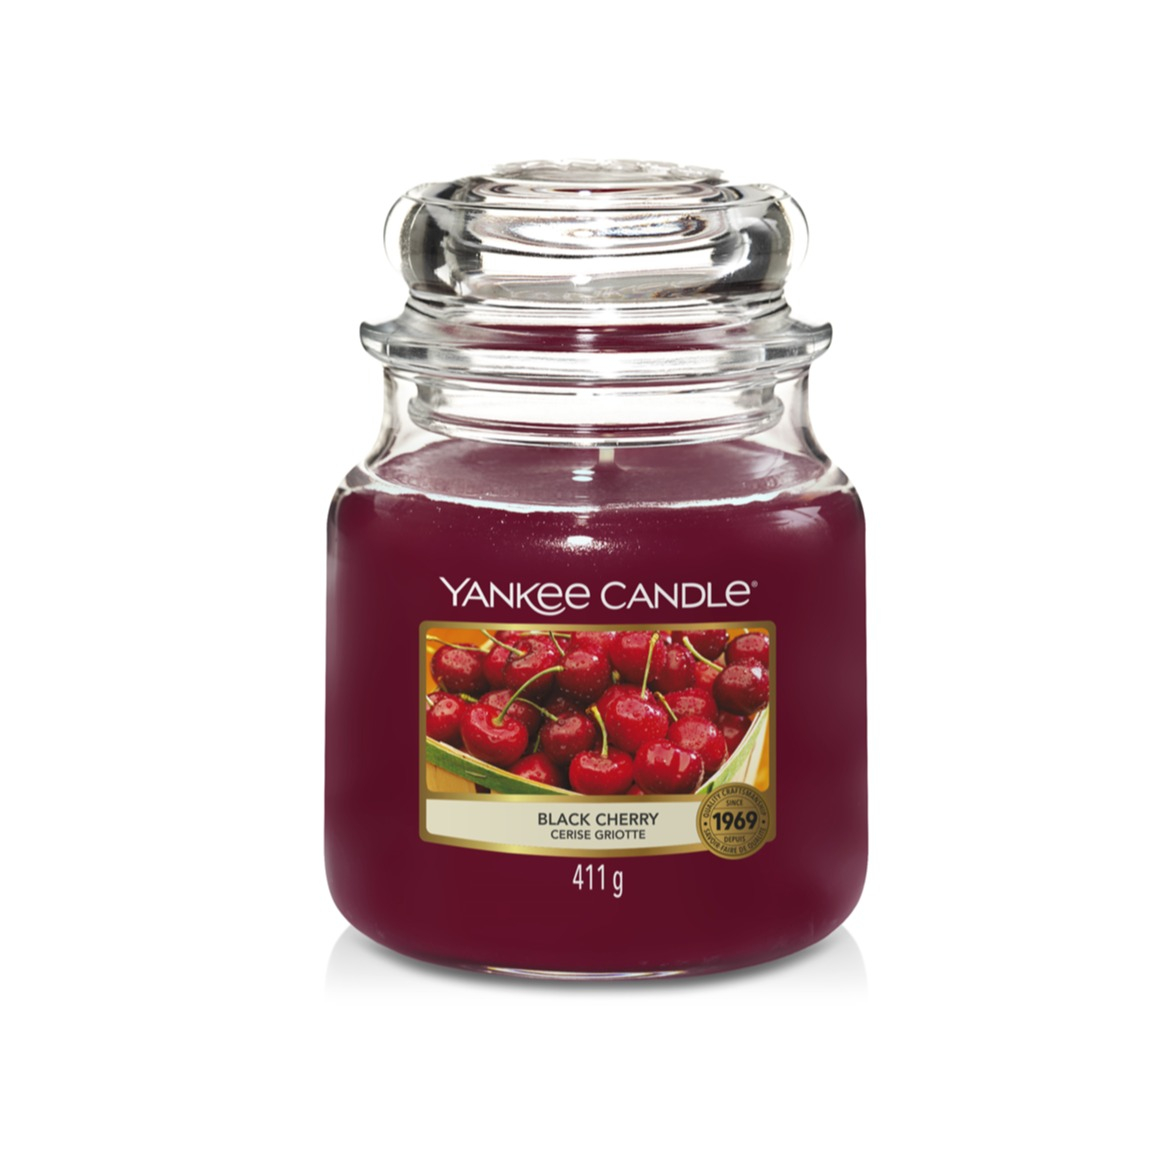 Image of Yankee Candle - (411g) Duft Kerze im Glas Medium Jar (10.00114.0035) - Black Cherry bei Apfelkiste.ch